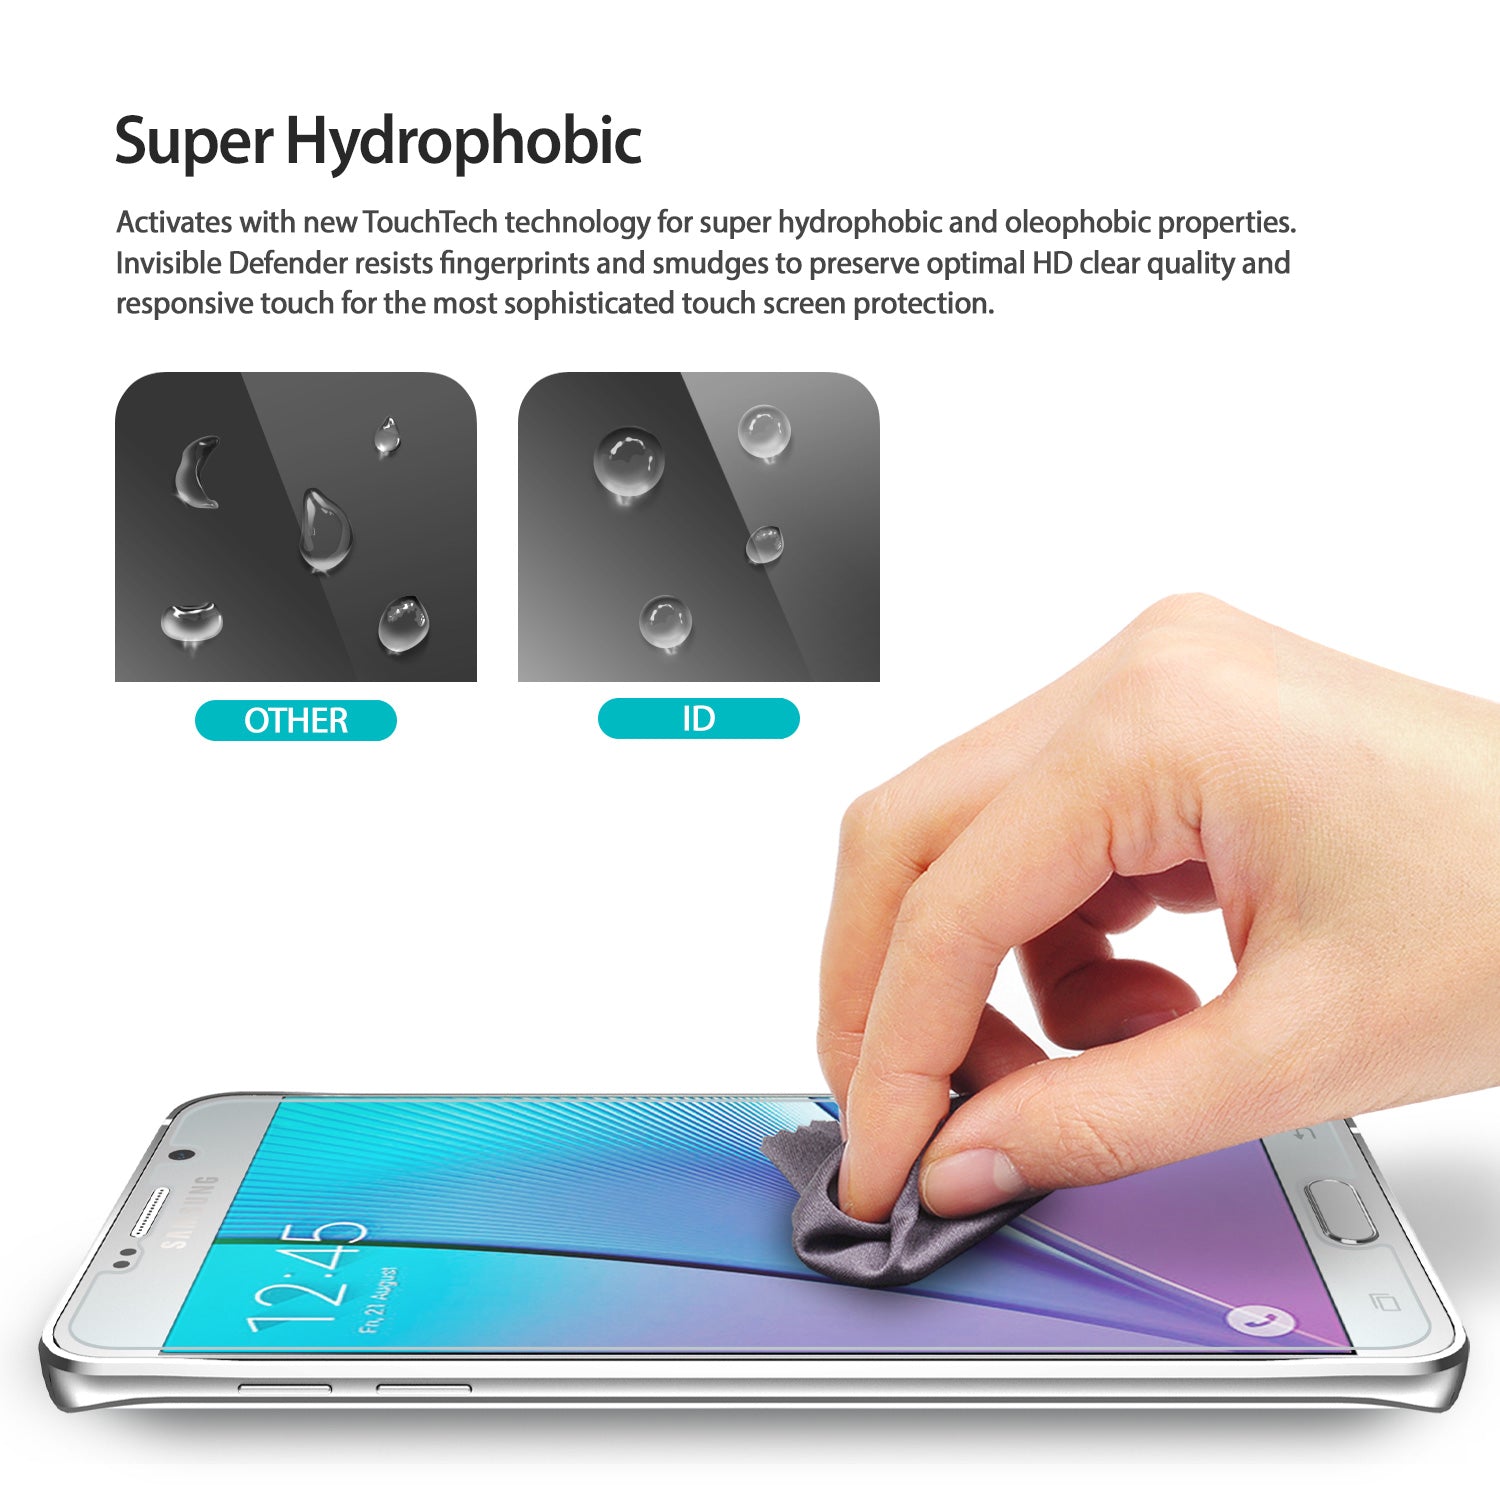 super hydrophobic and oleophobic coating to maximize protection